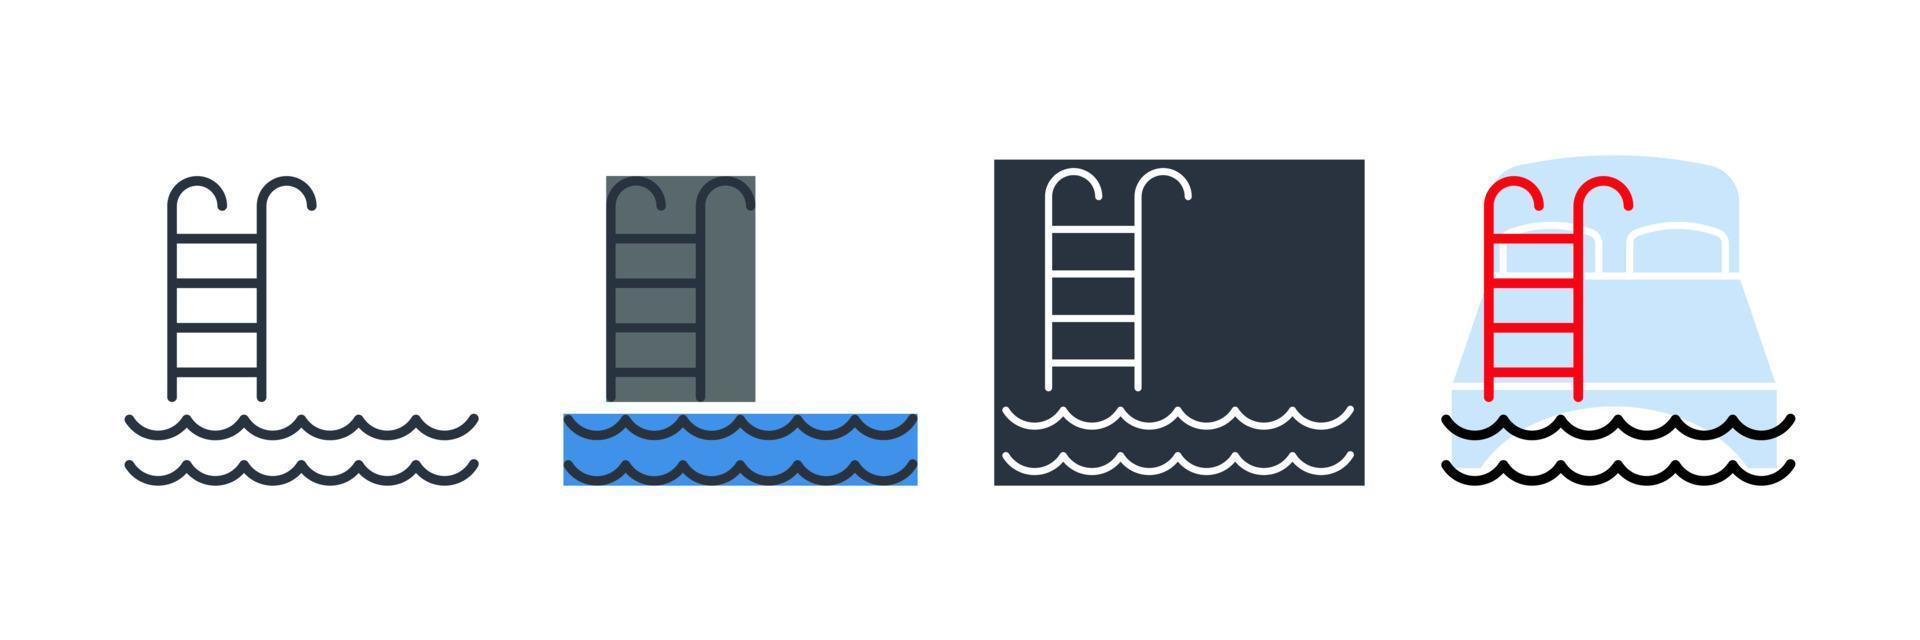 Pool-Symbol-Logo-Vektor-Illustration. Schwimmbad-Symbolvorlage für Grafik- und Webdesign-Sammlung vektor